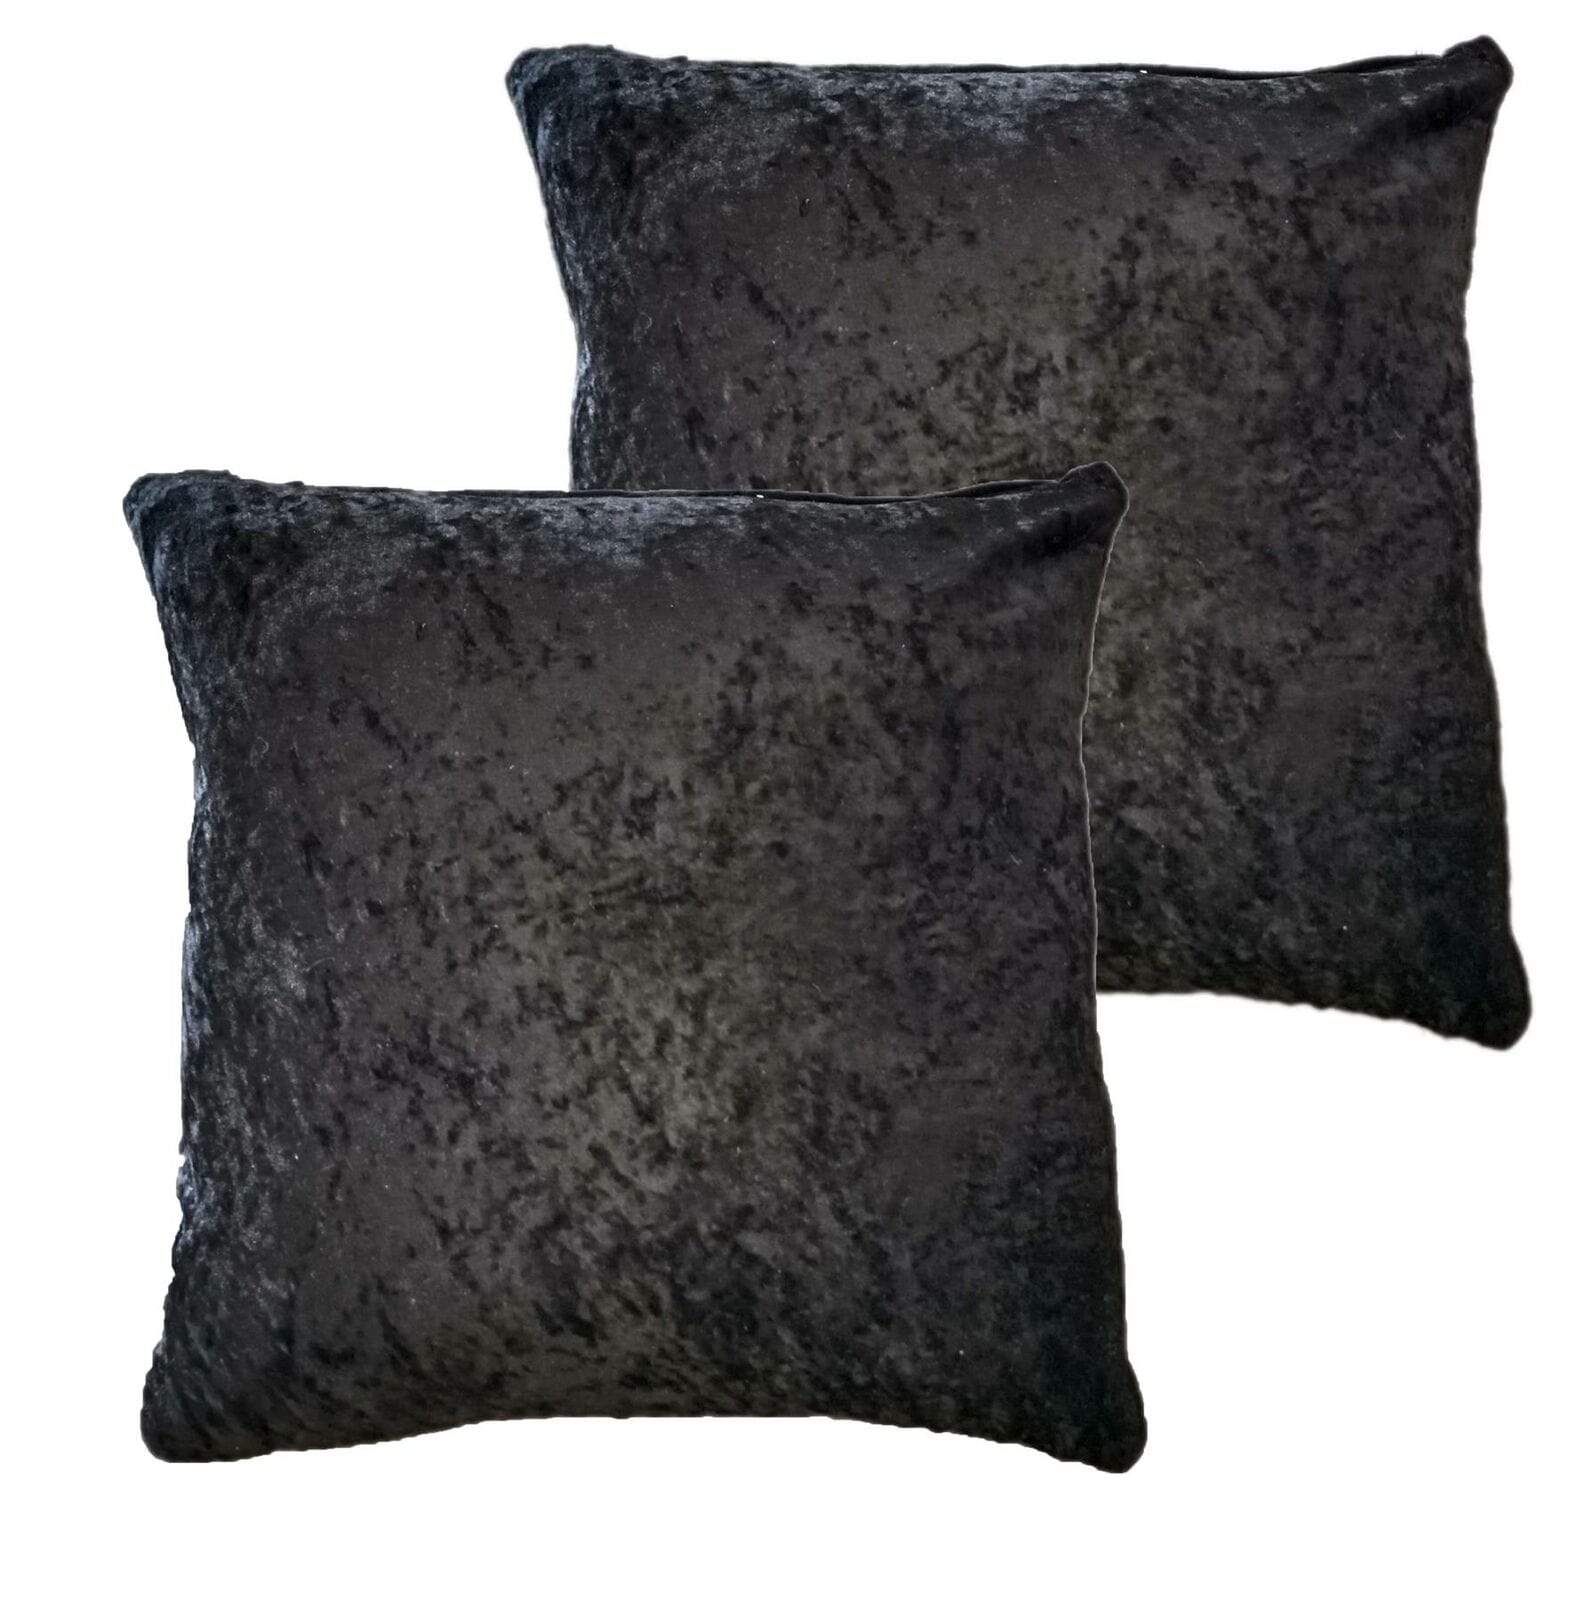 Crushed Velvet Cushion Covers BLACK OLIVIA ROCCO Cushions